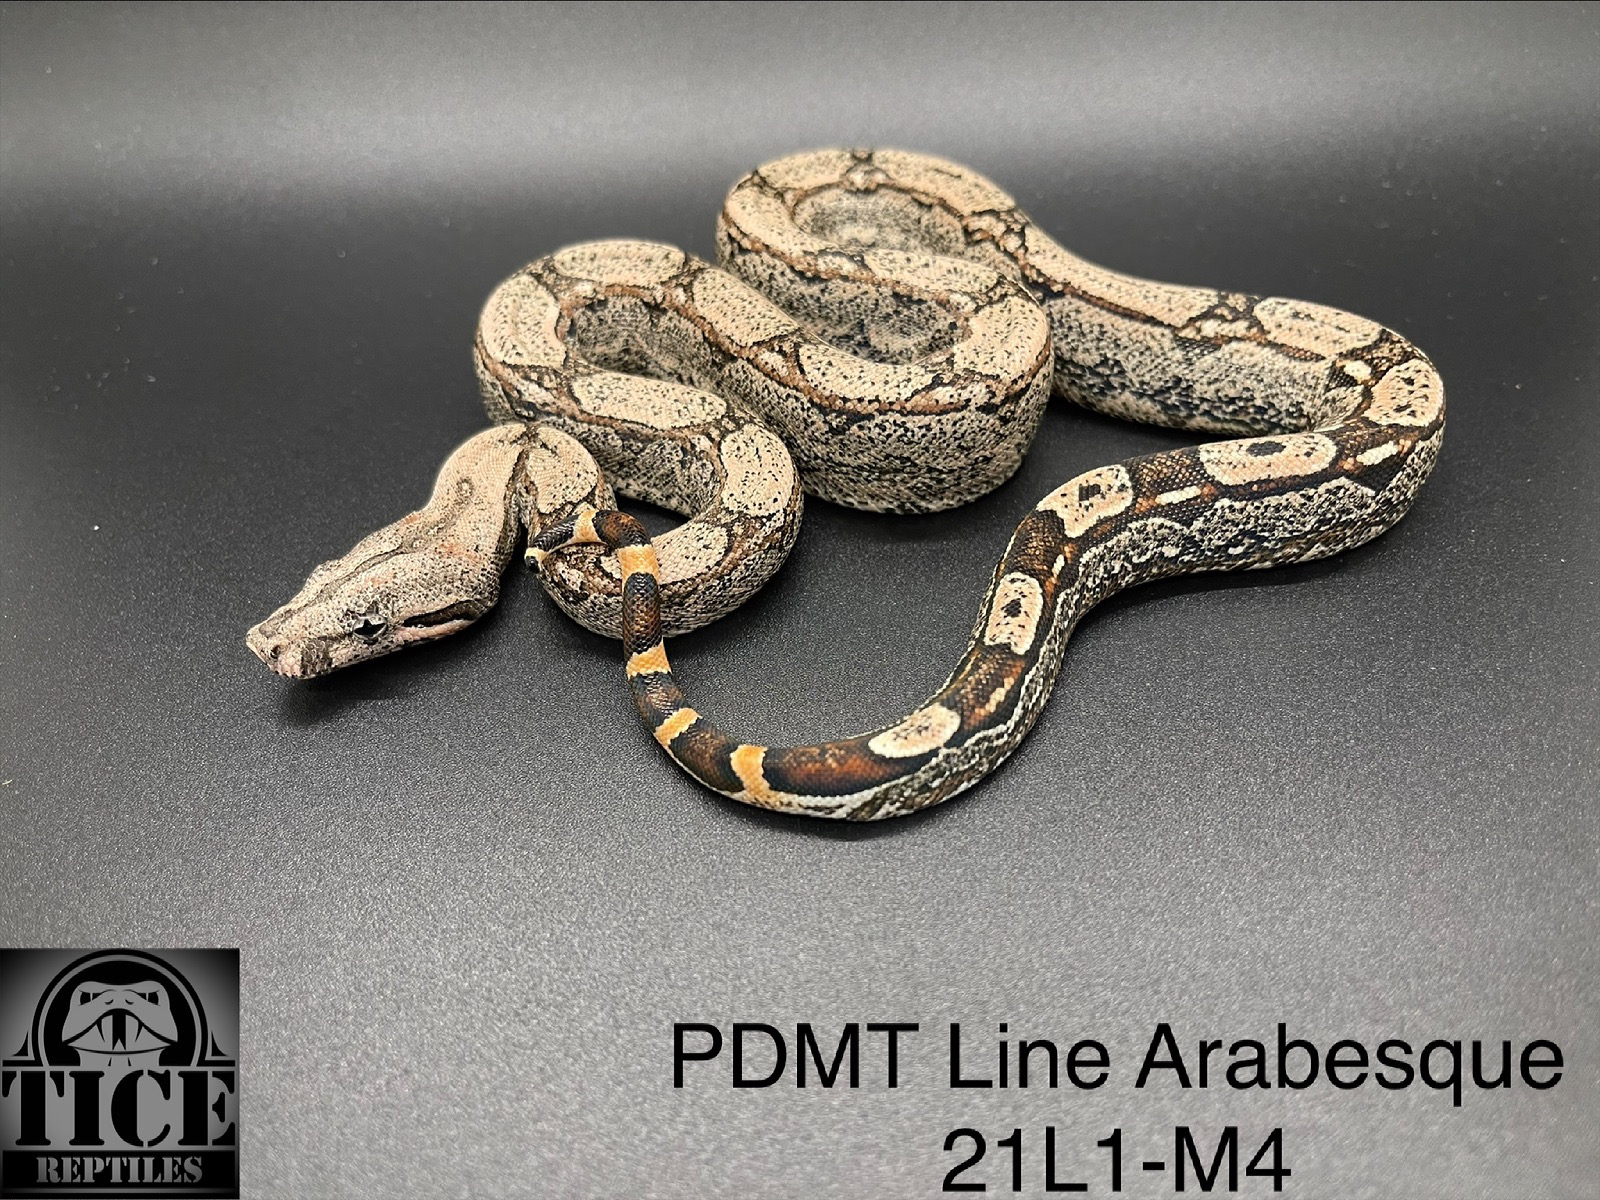 Arabesque Boa Constrictor by Tice Reptiles